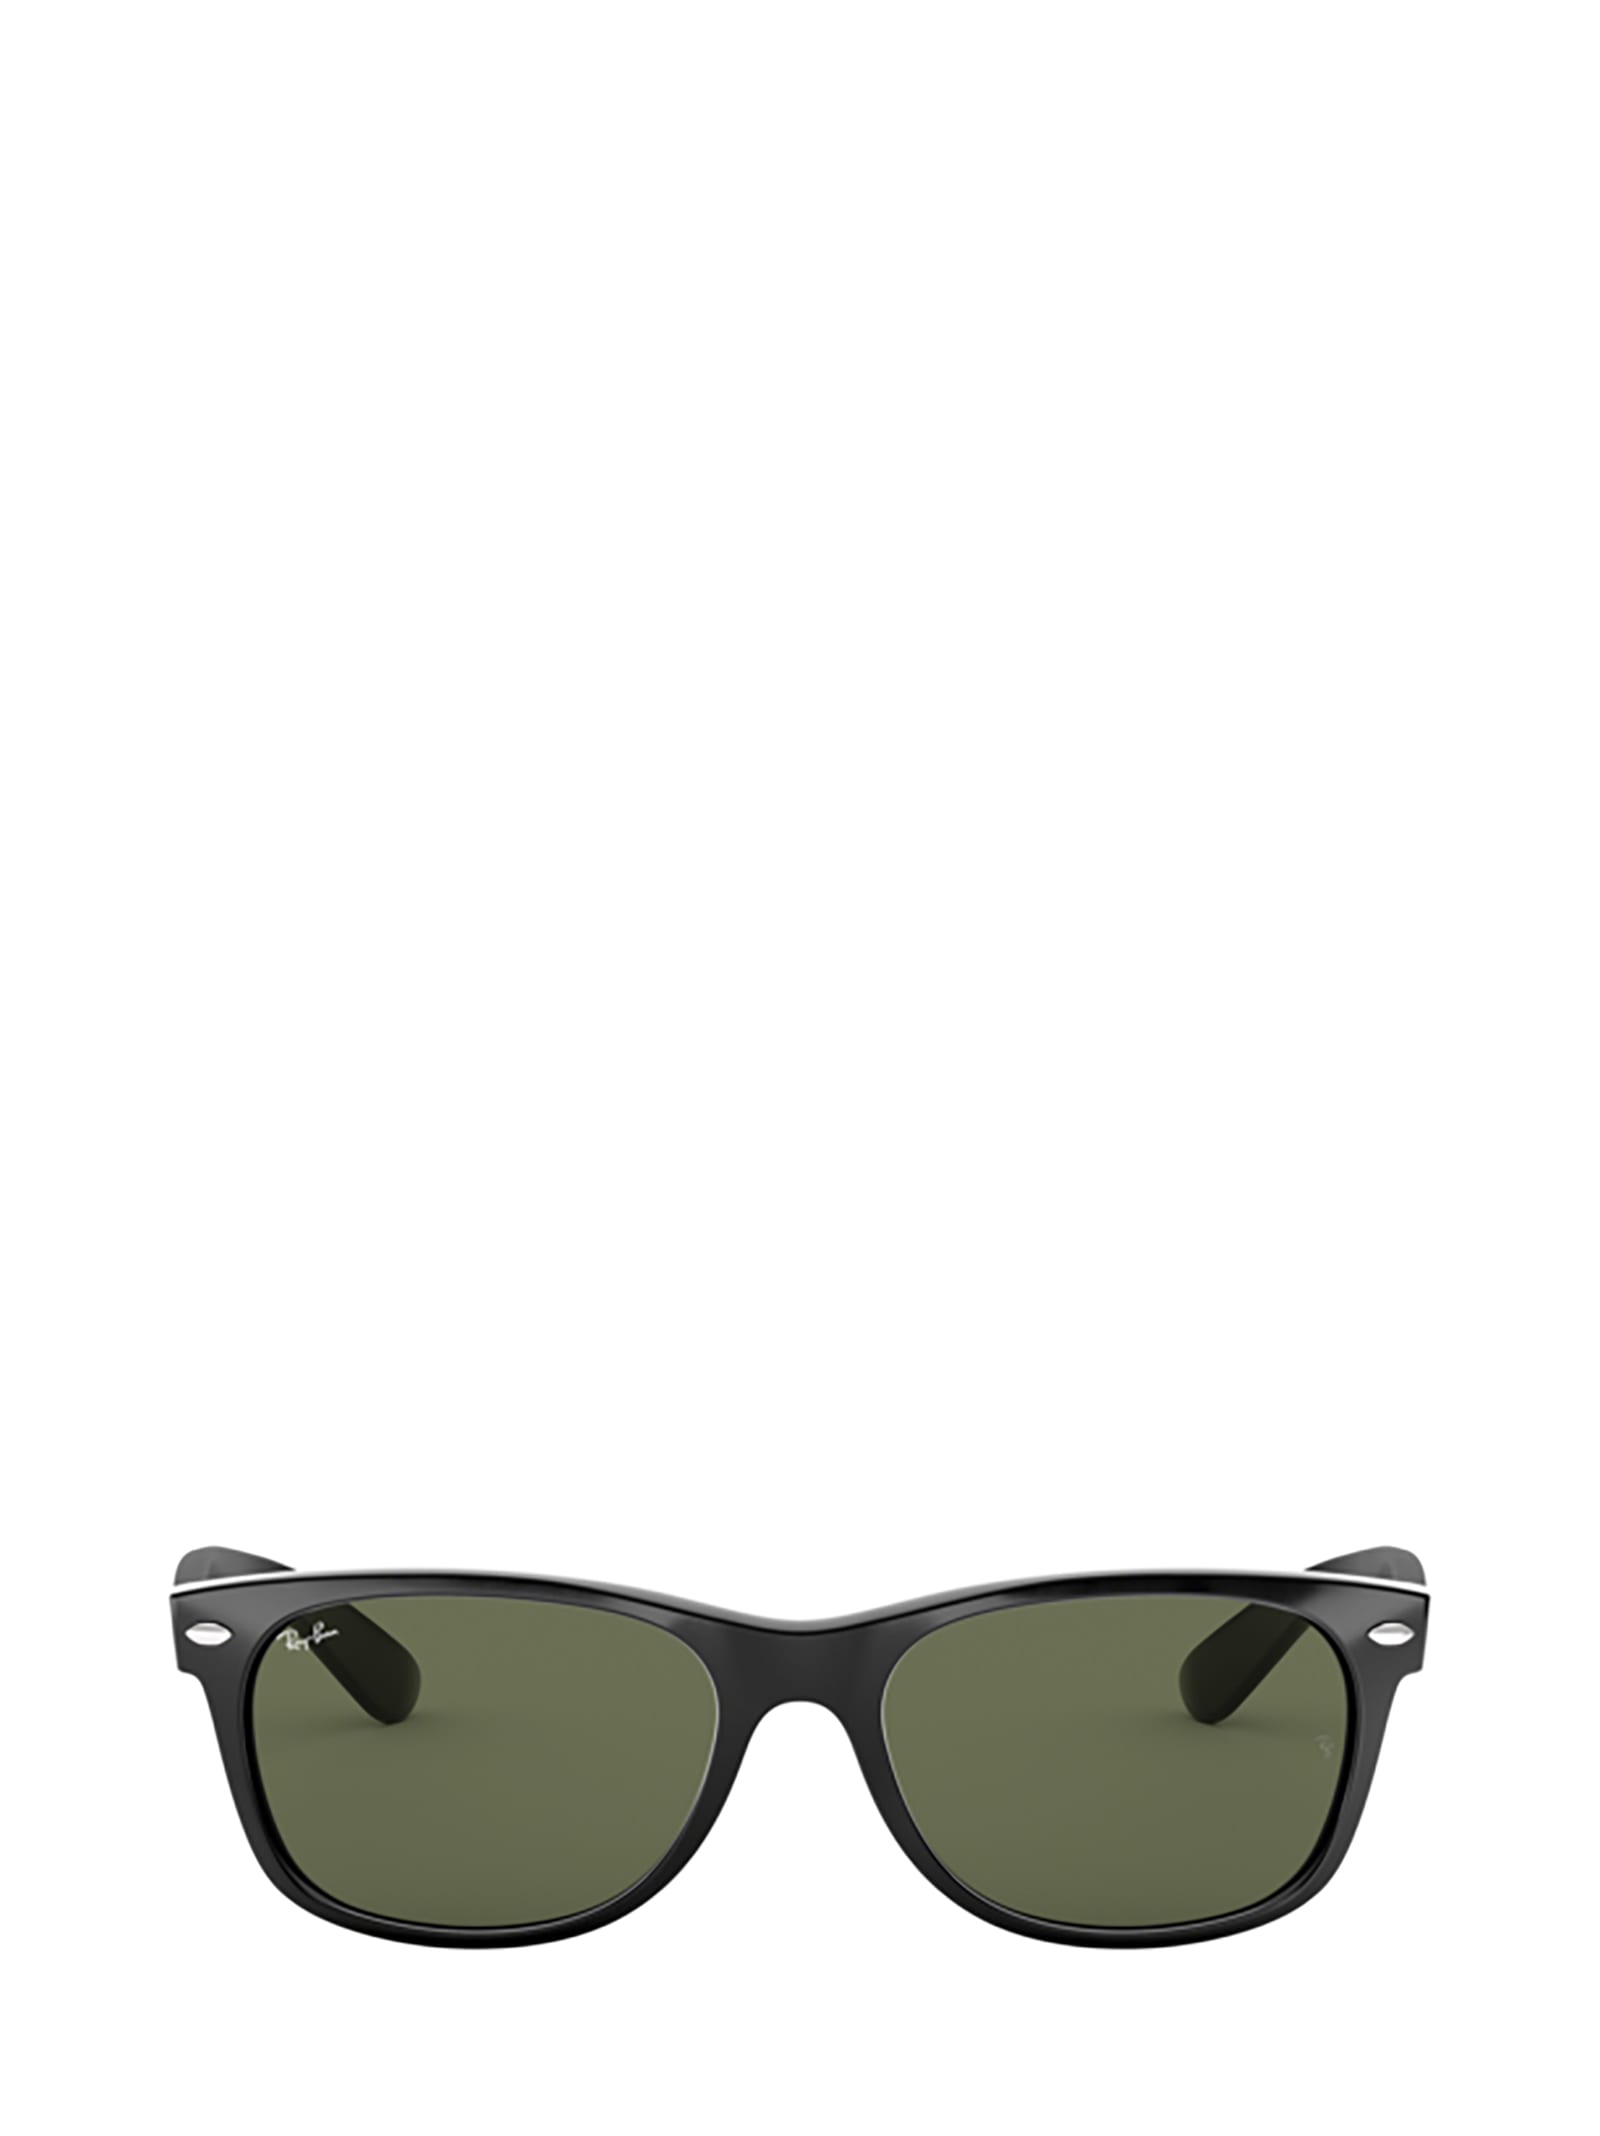 Ray Ban Rb2132 Black Sunglasses